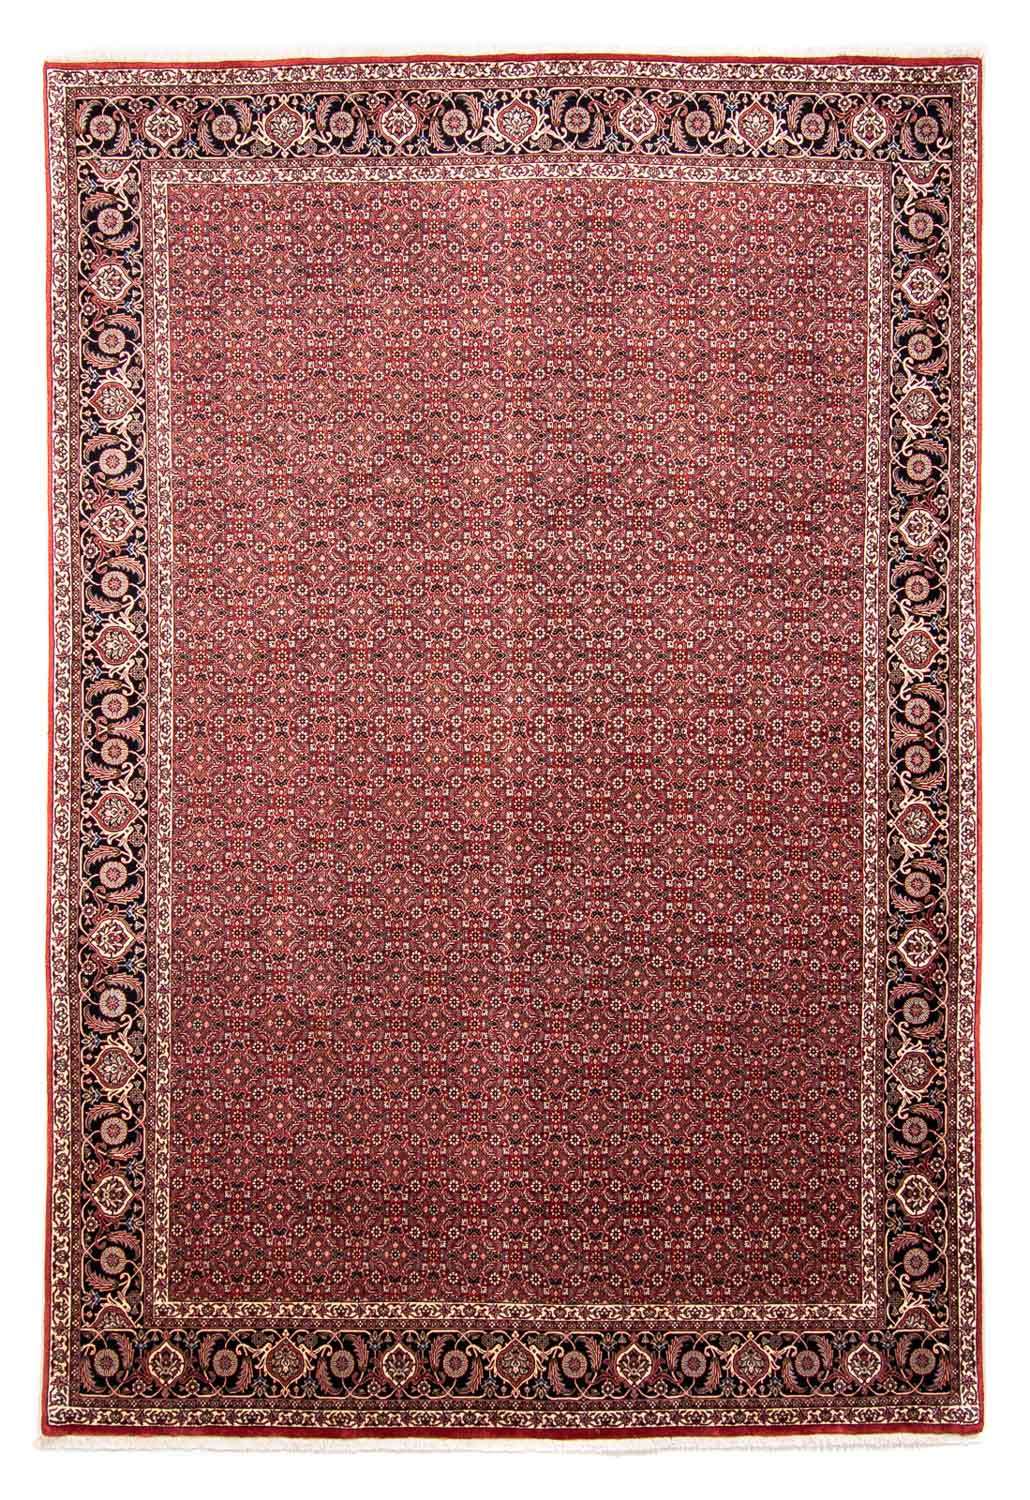 Persisk teppe - Bijar - 350 x 245 cm - rød